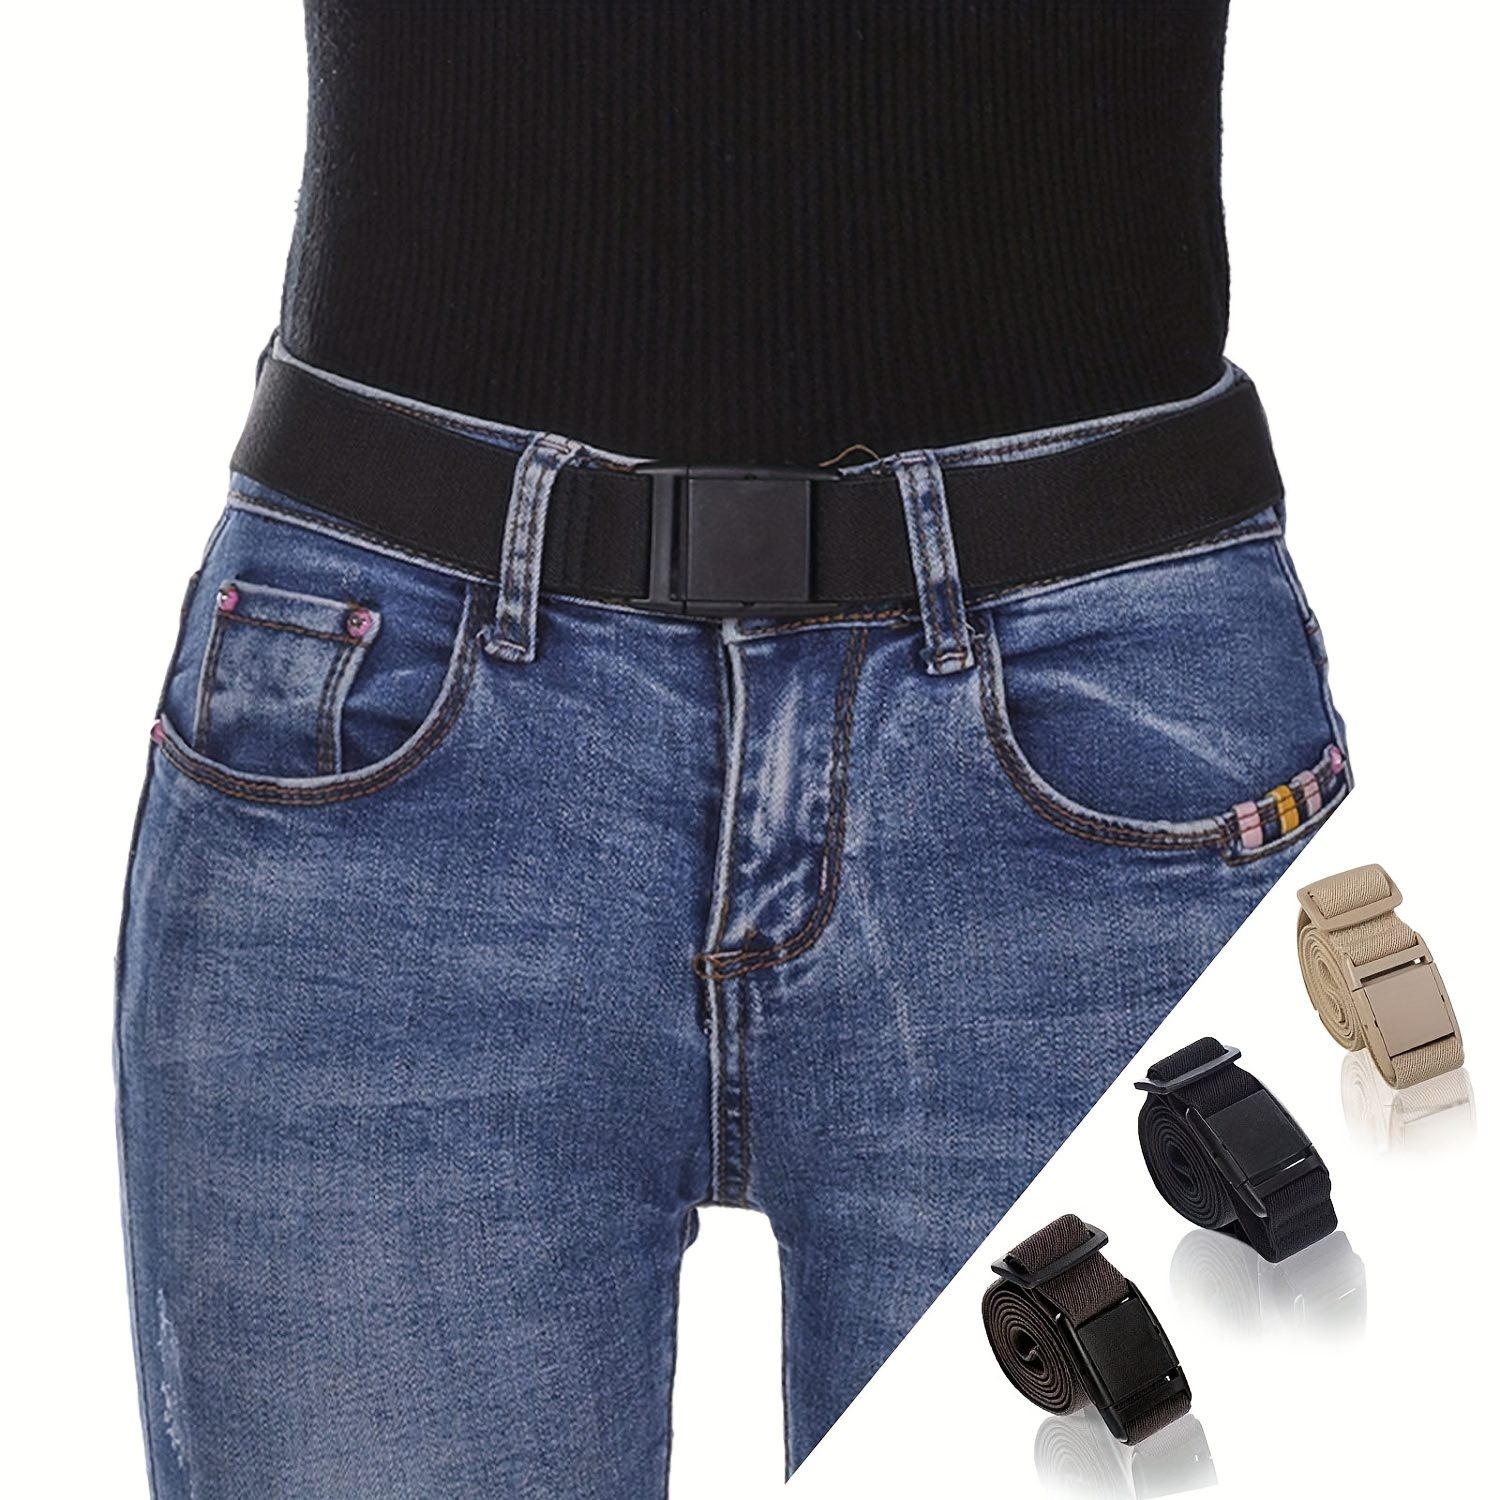 

Unisex Invisible Stretch Belt Solid Color No Show Elastic Waist Belt Flat Buckle Solid Color Belts For Jeans Pants